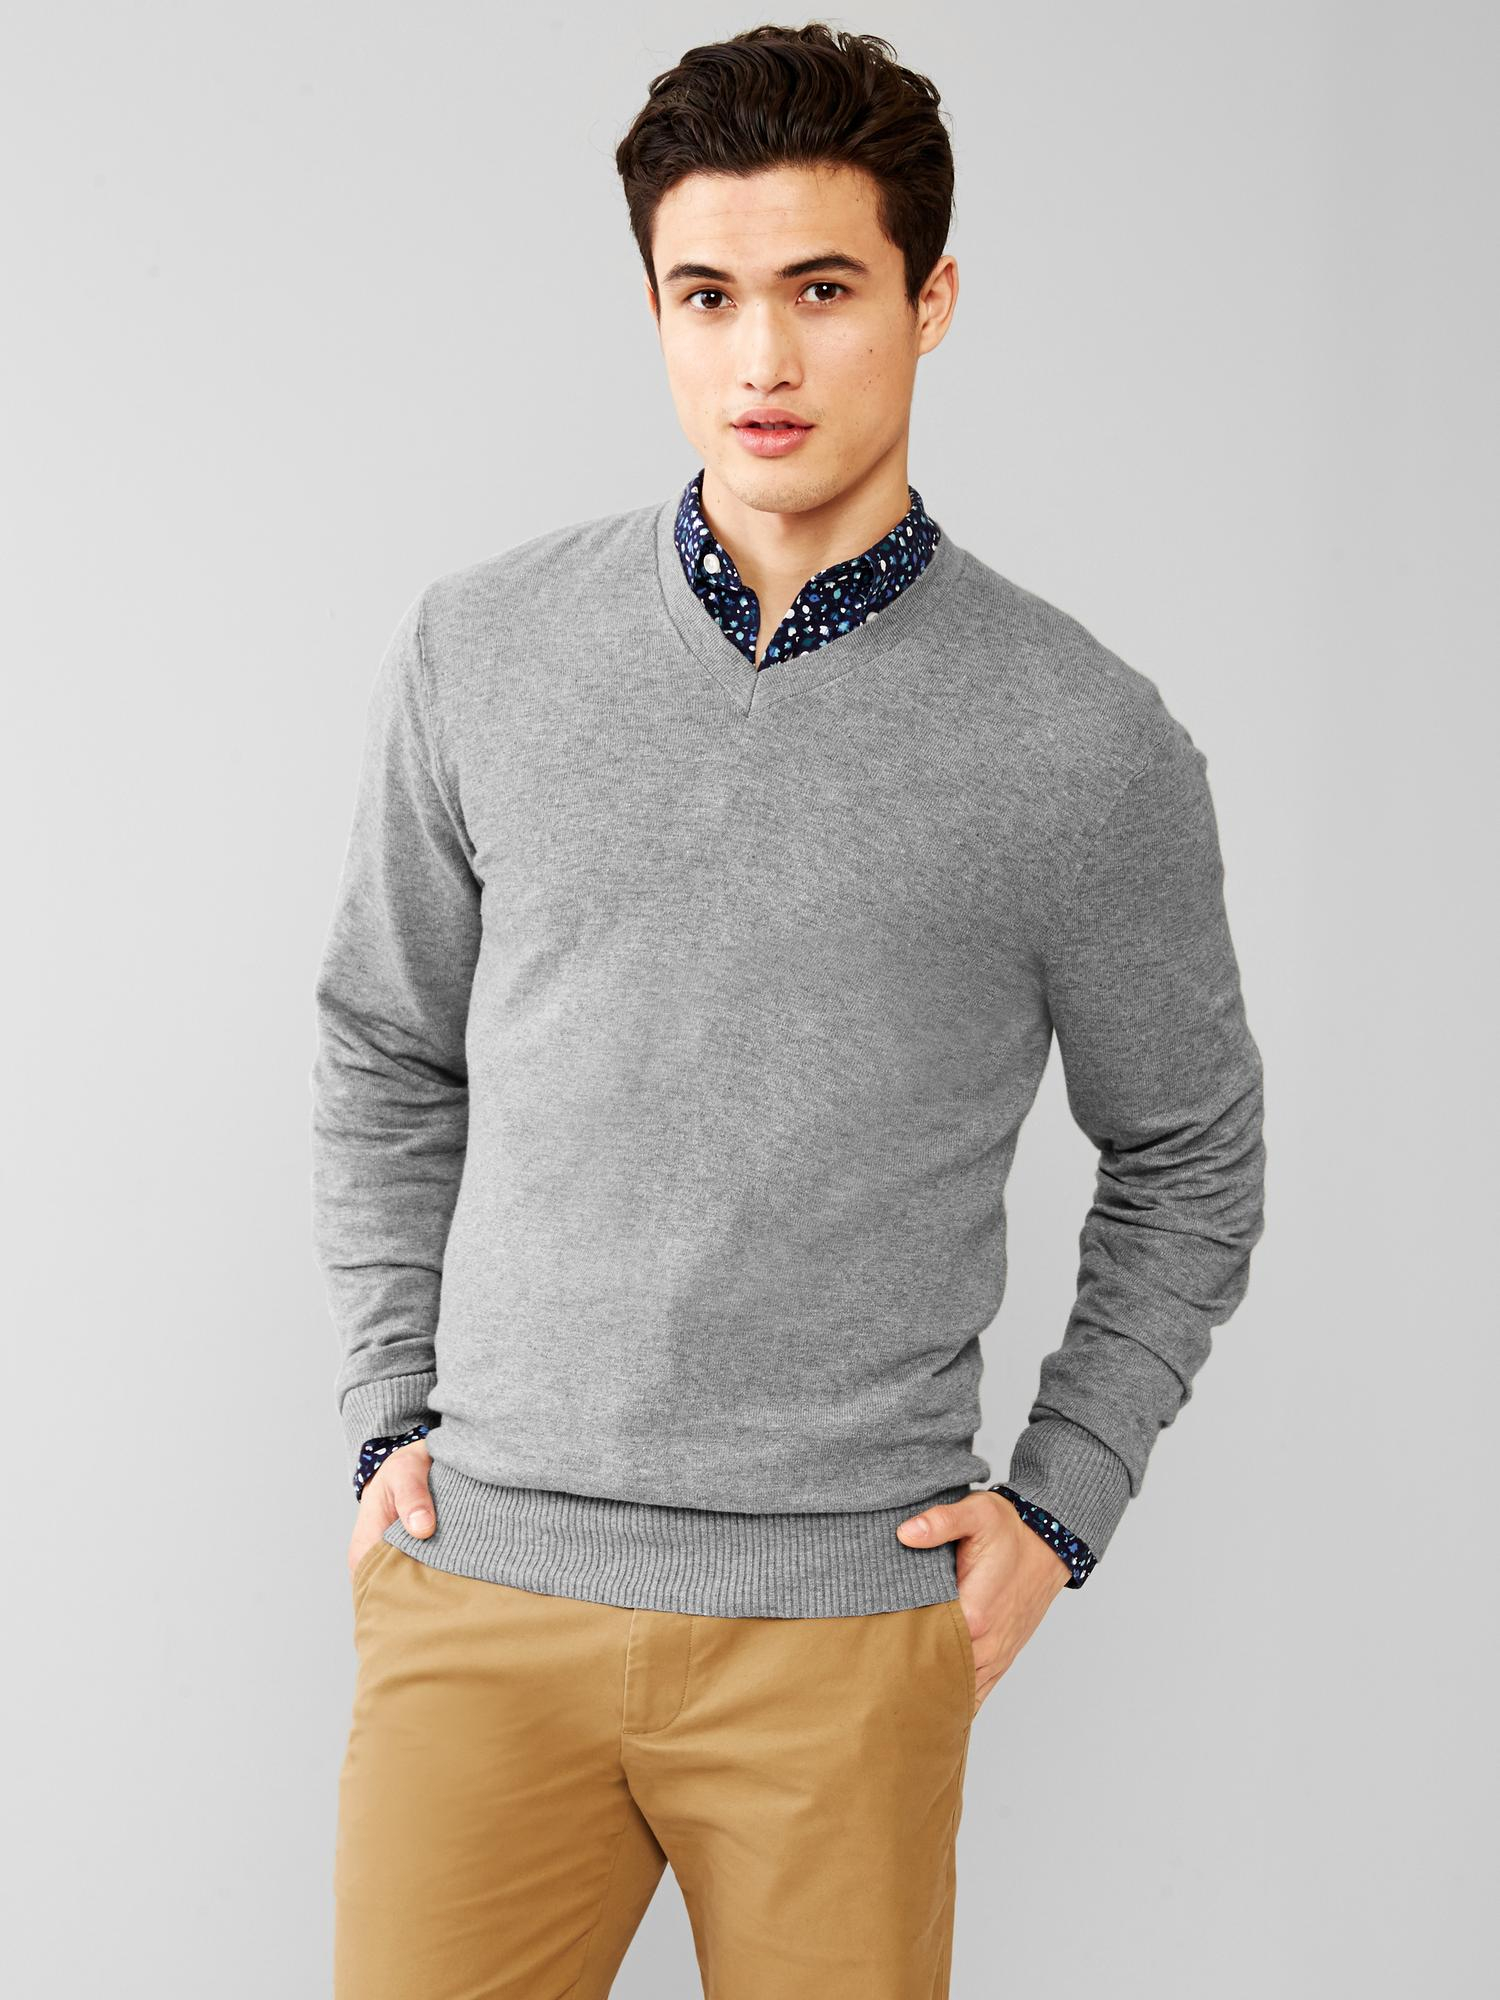 Gap Cotton Slub V-neck Sweater in Gray (gray heather) | Lyst